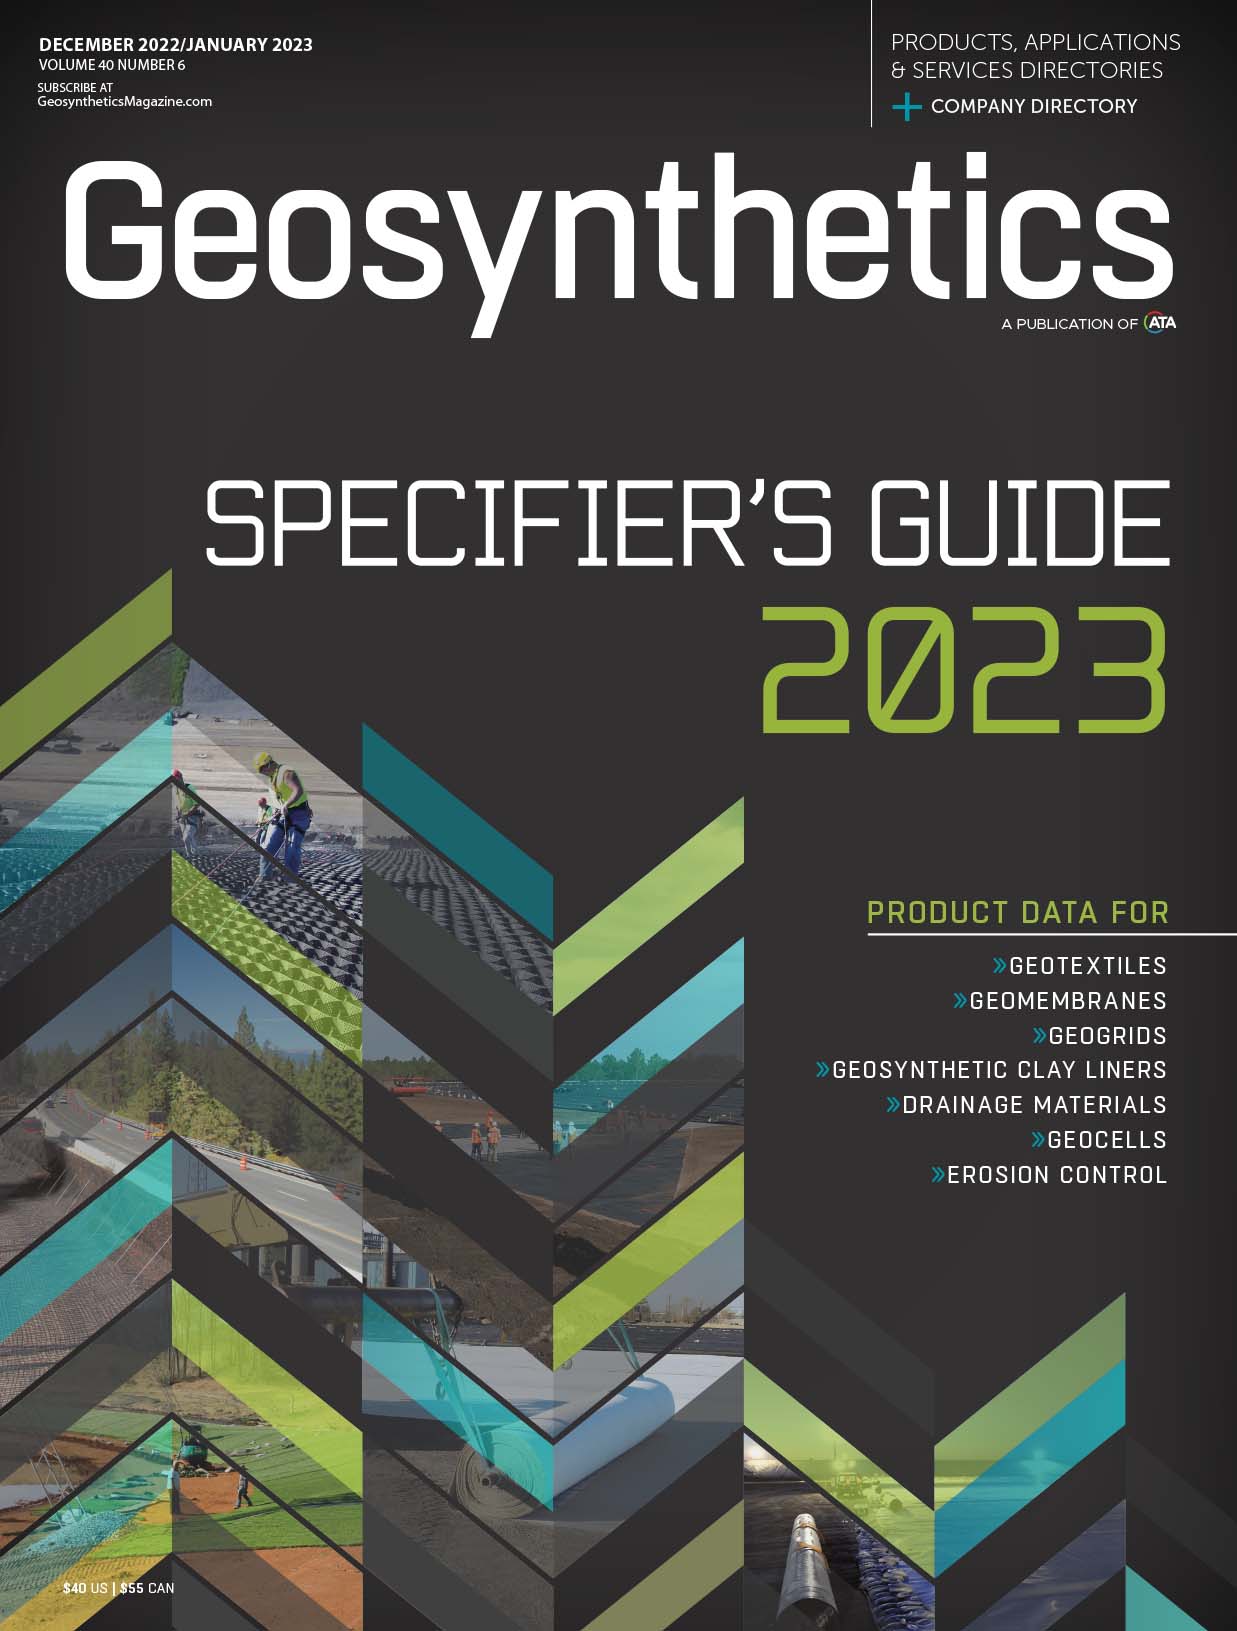 Geosynthetics Buyer's Guide 2023